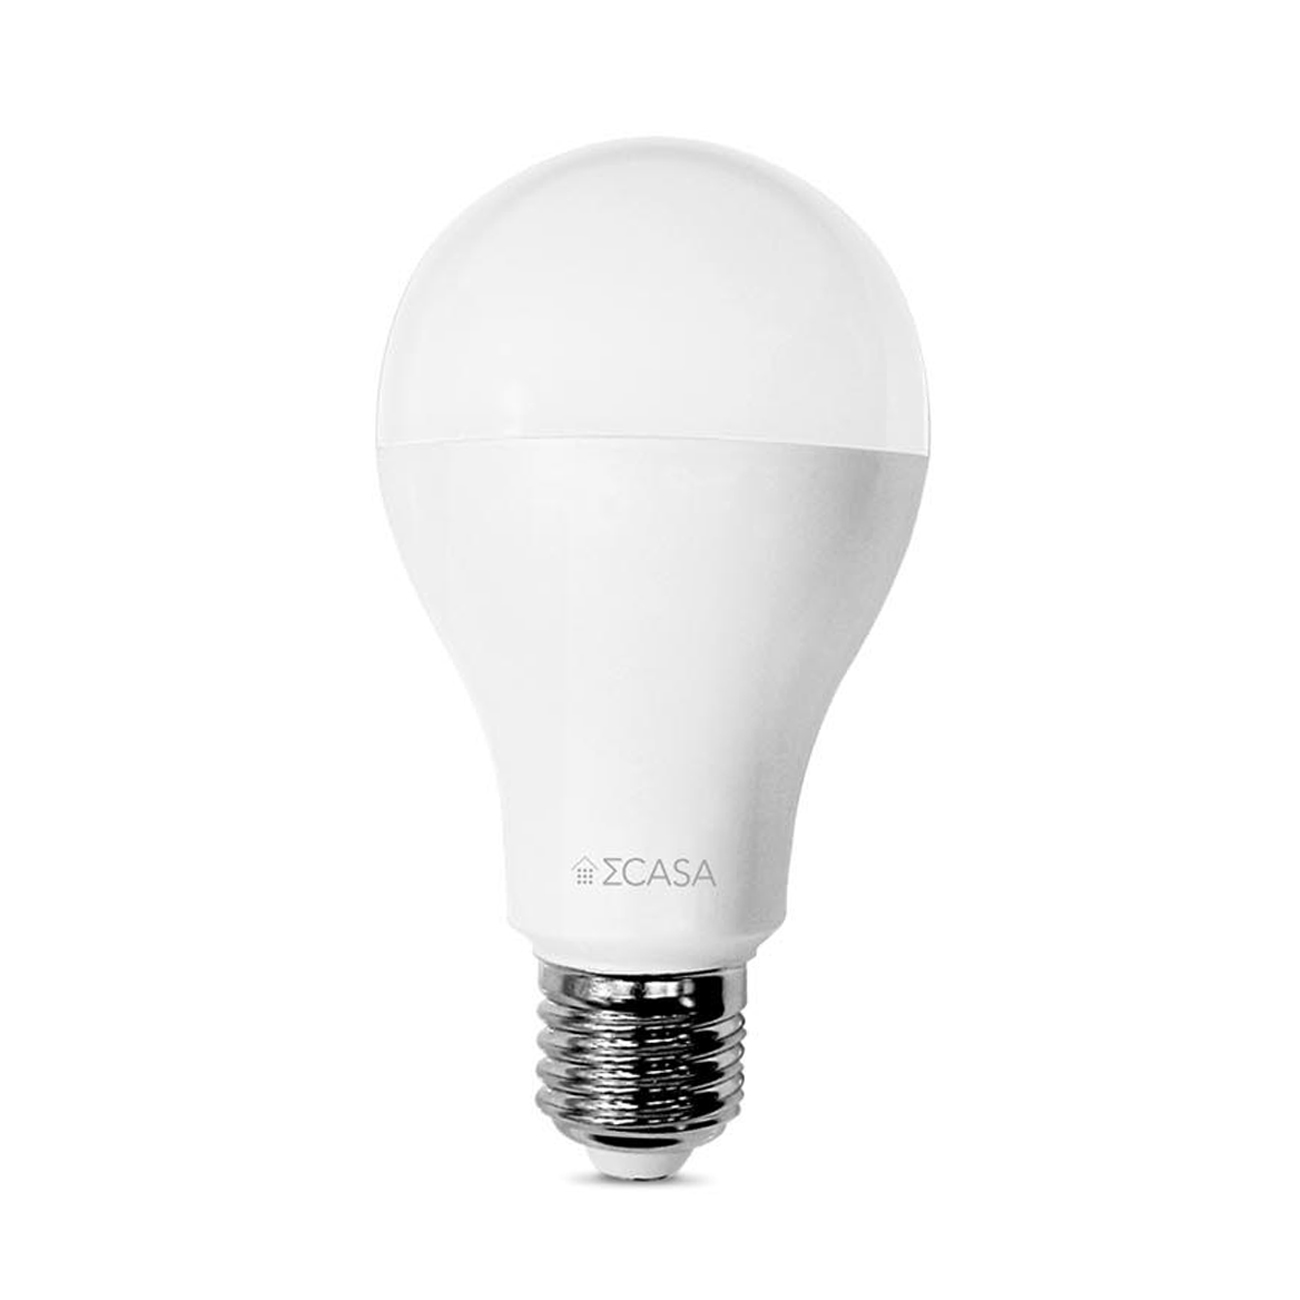 Sigma Casa Home Control Smart Light E27 LED dimmbar - 182906